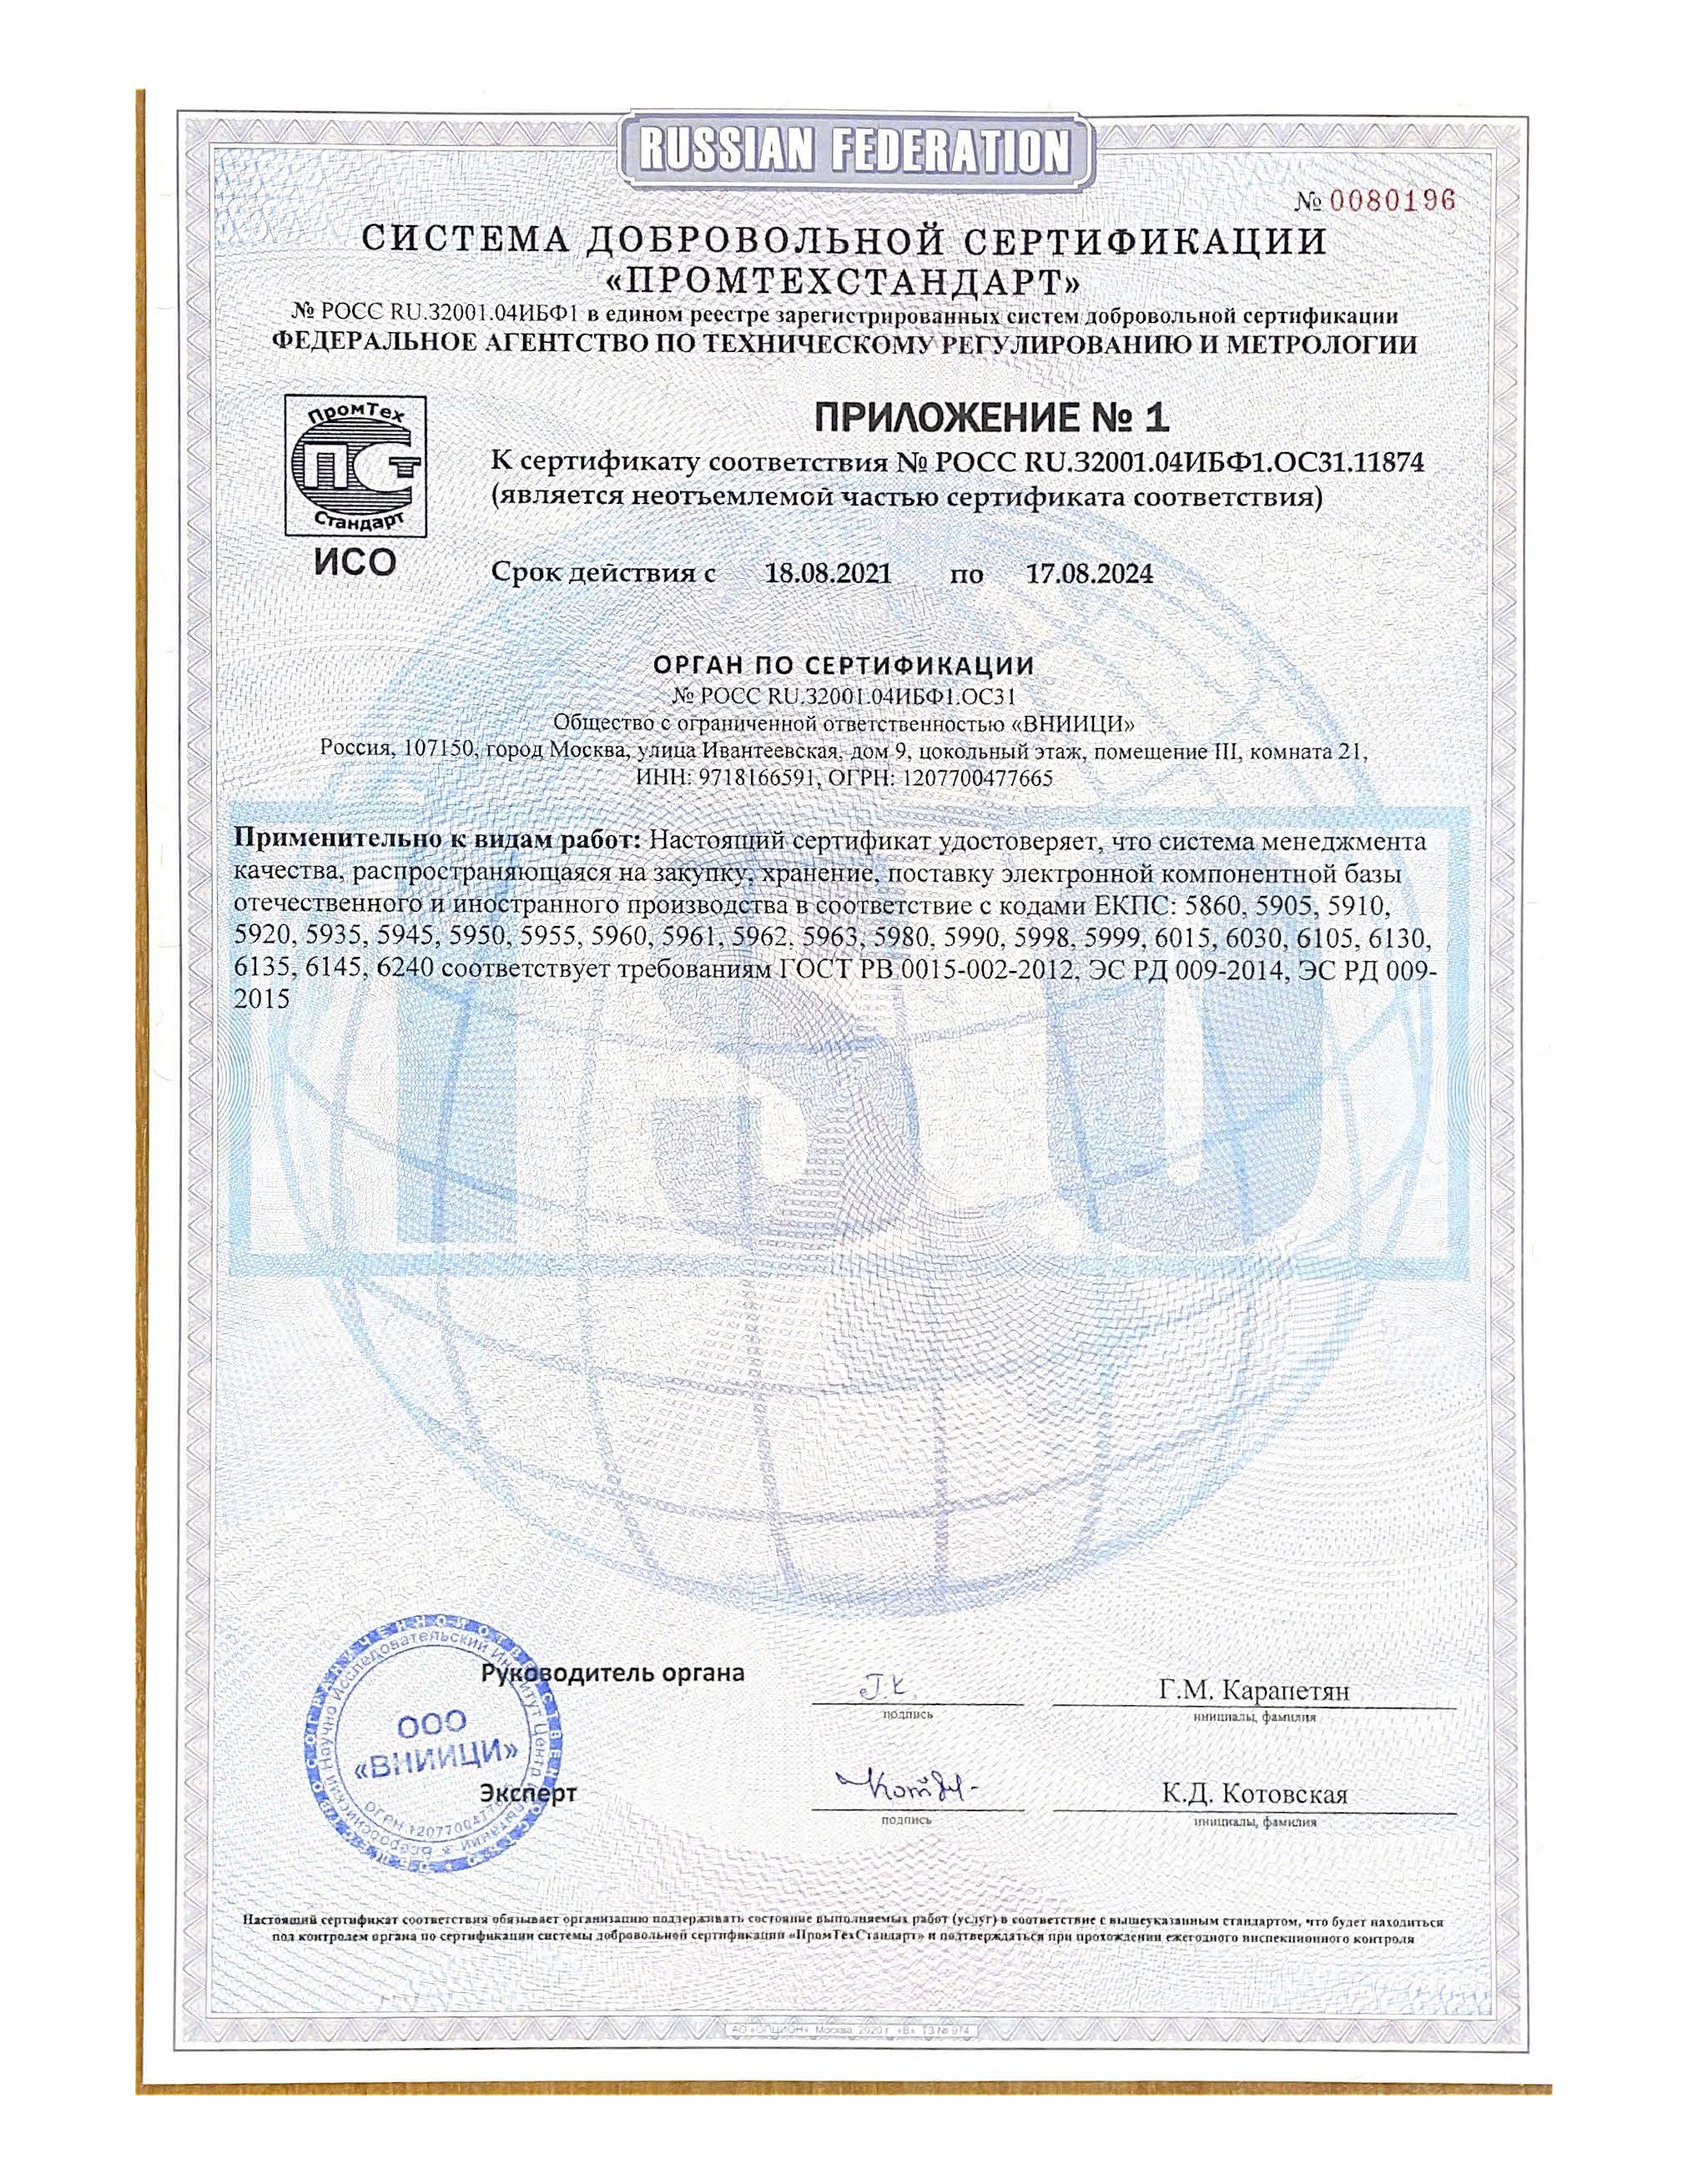 Сертификат ГОСТ РВ 0015-002-2012